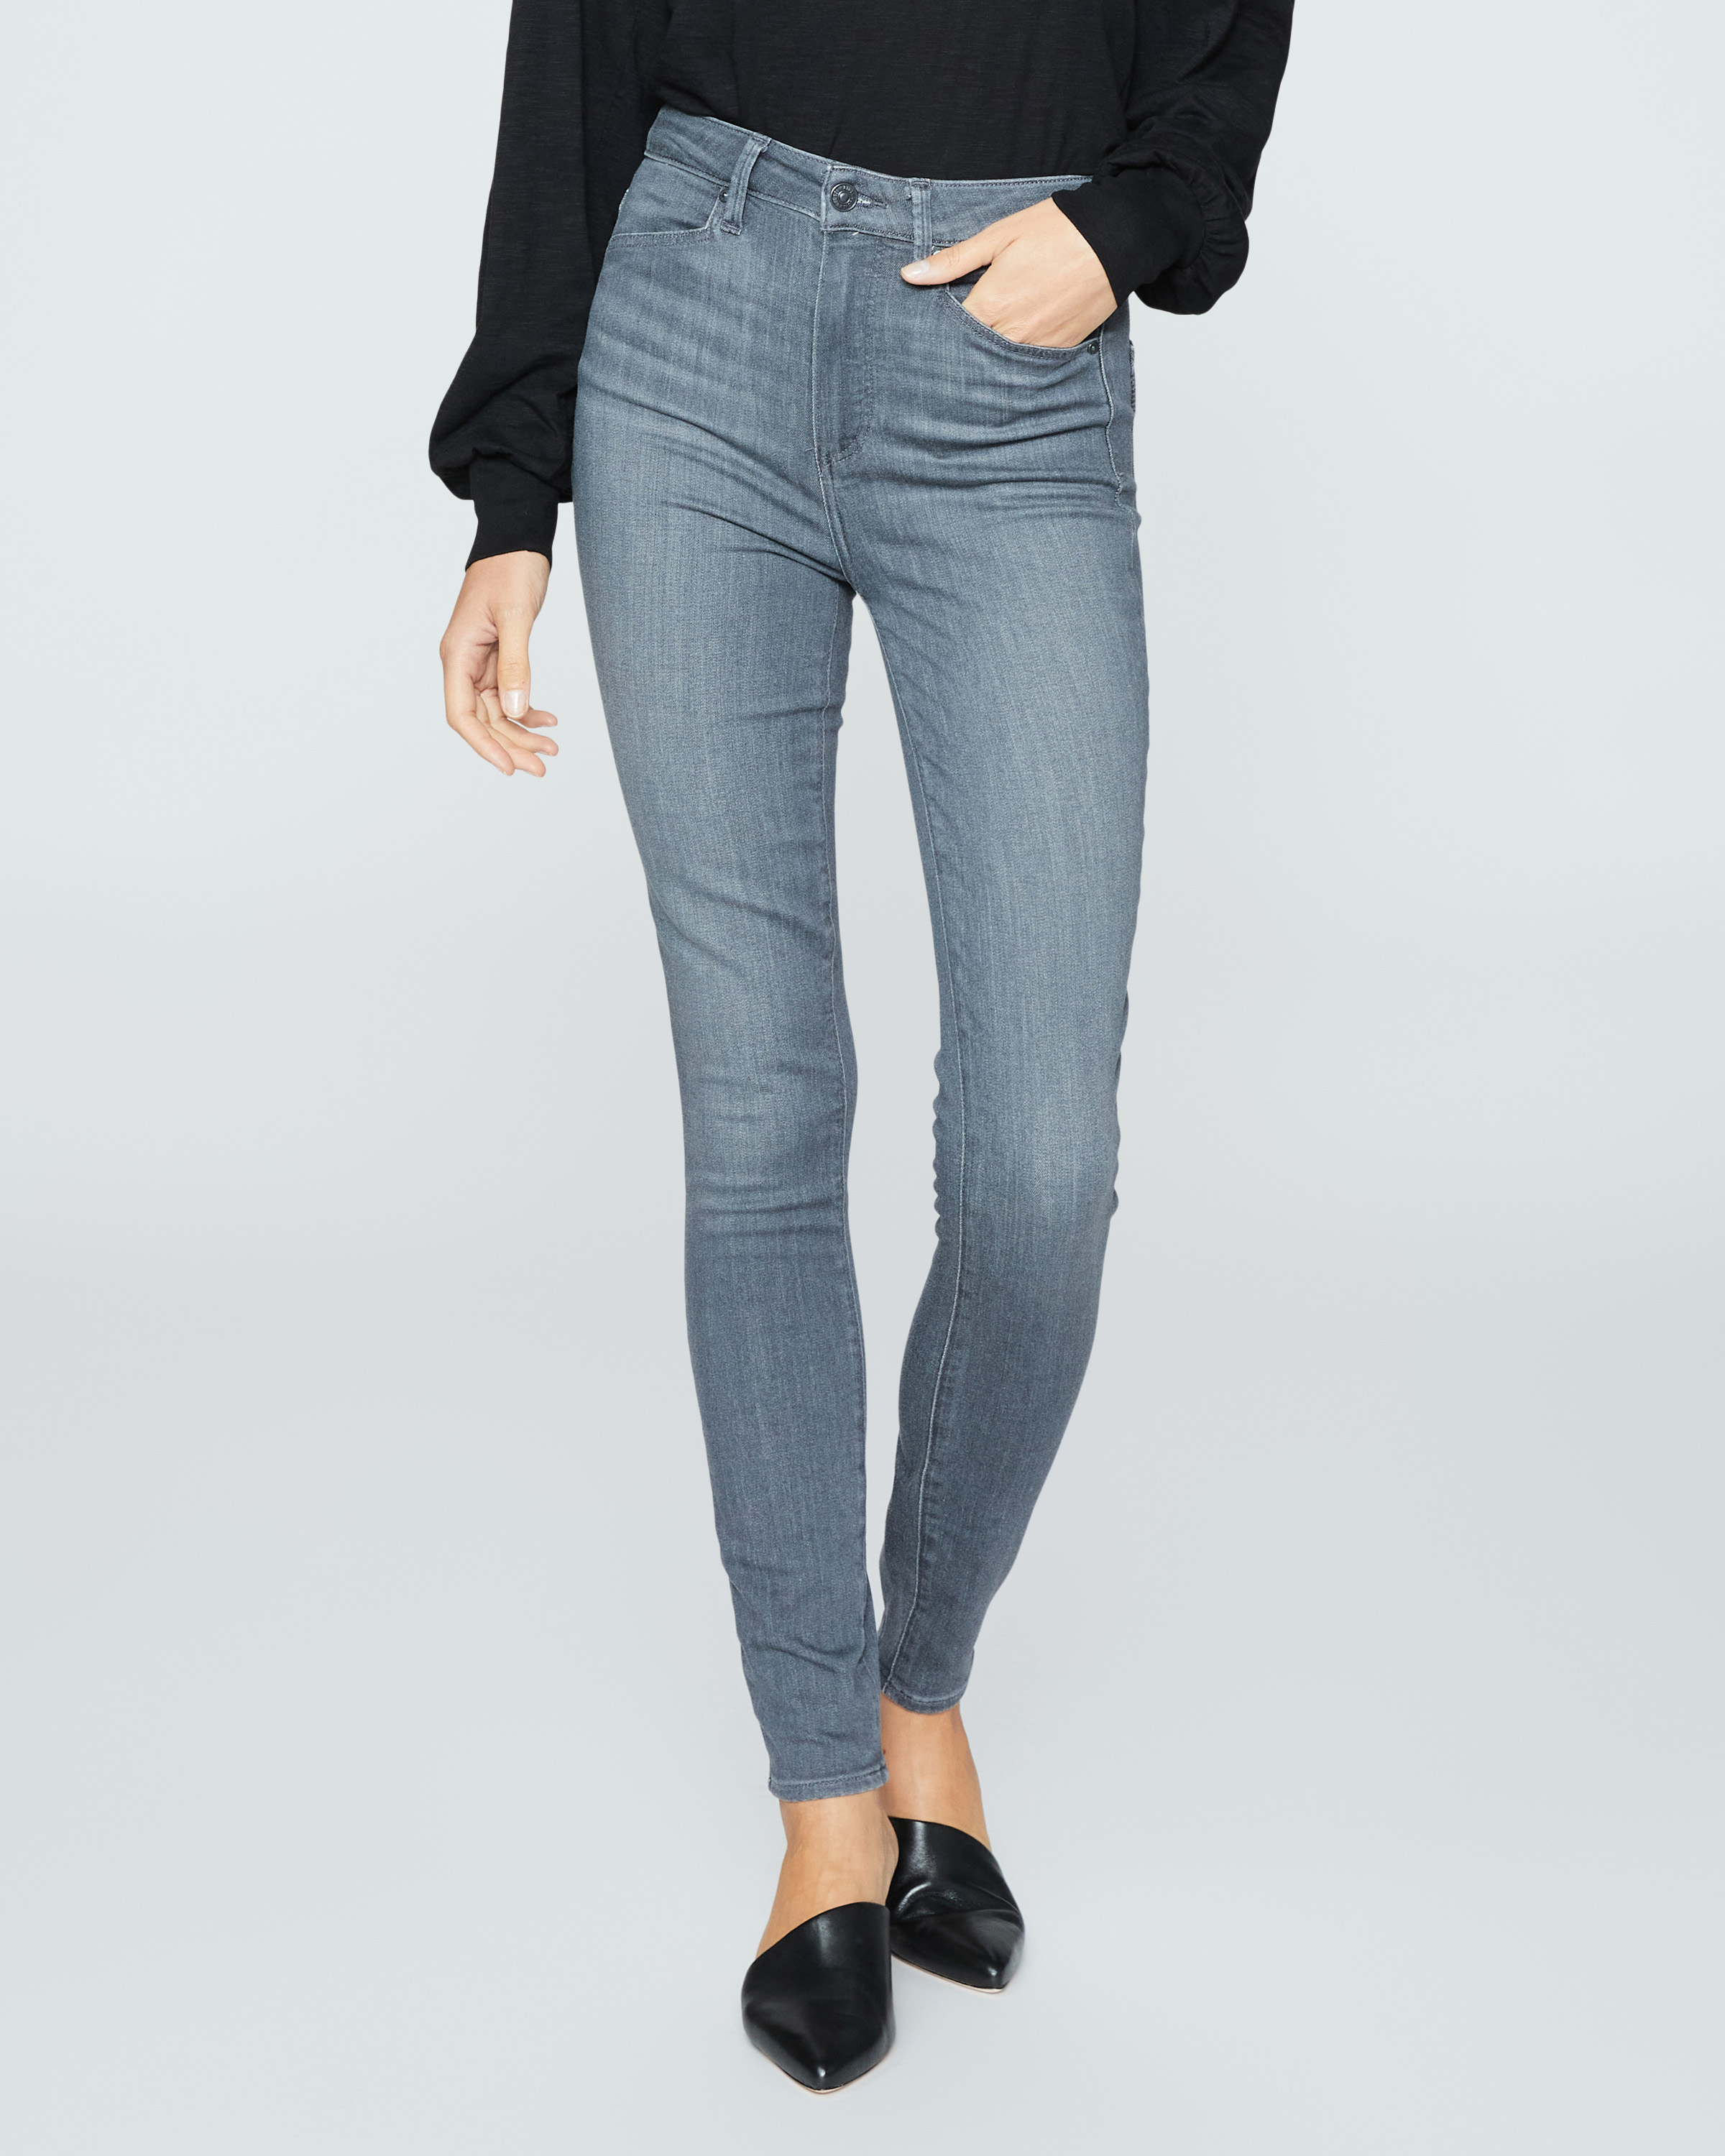 NEW PAIGE Denim Women's Verdugo Ultra Skinny Jeans in Silver Fox Gray MSRP $189 